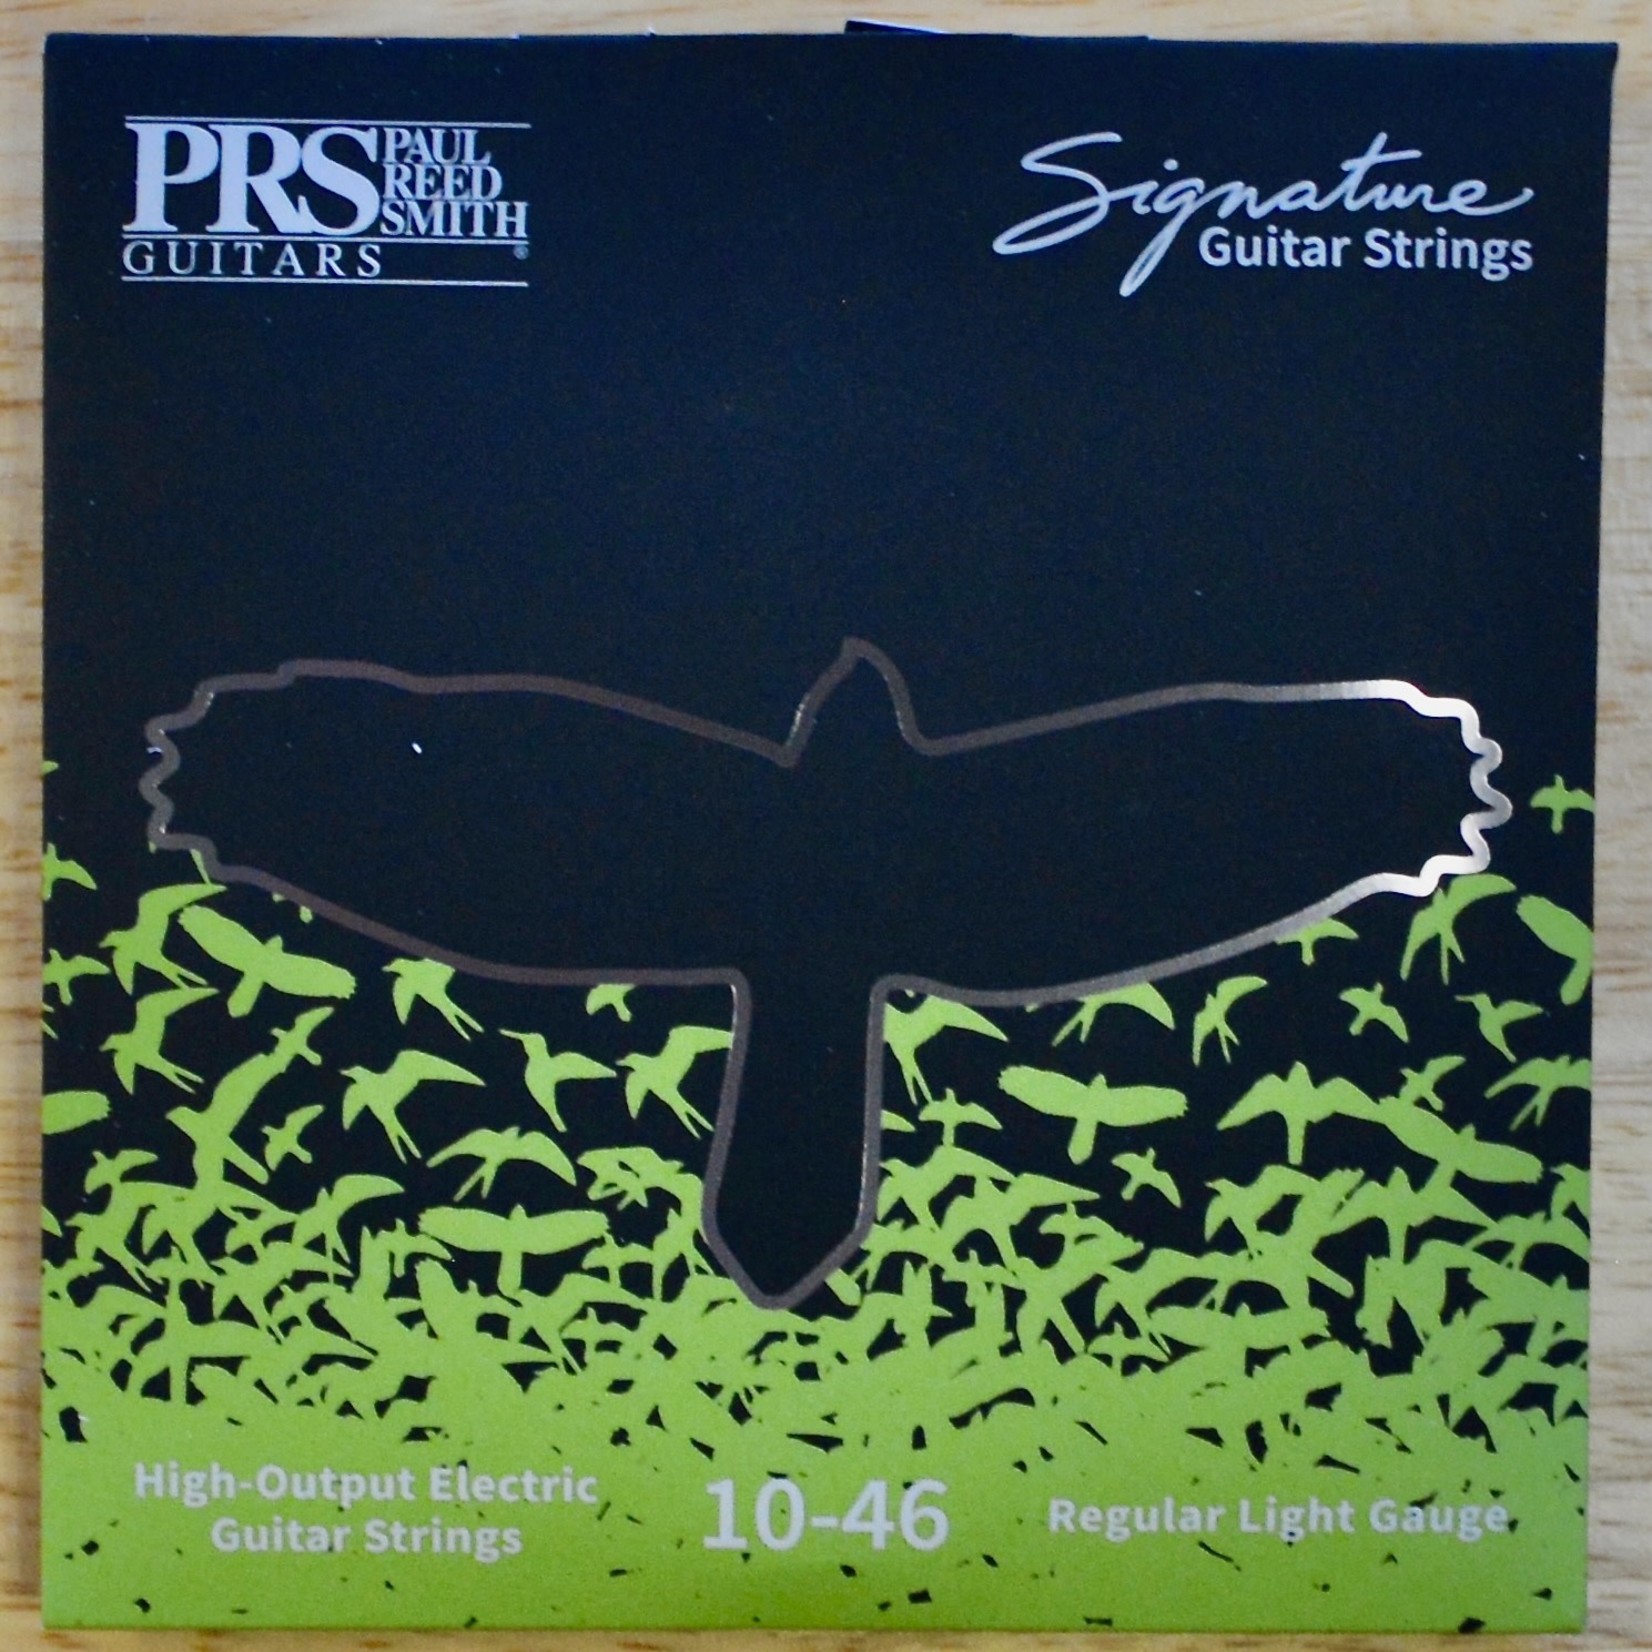 Paul Reed Smith PRS Signature Regular Light Guitar Strings 10-46